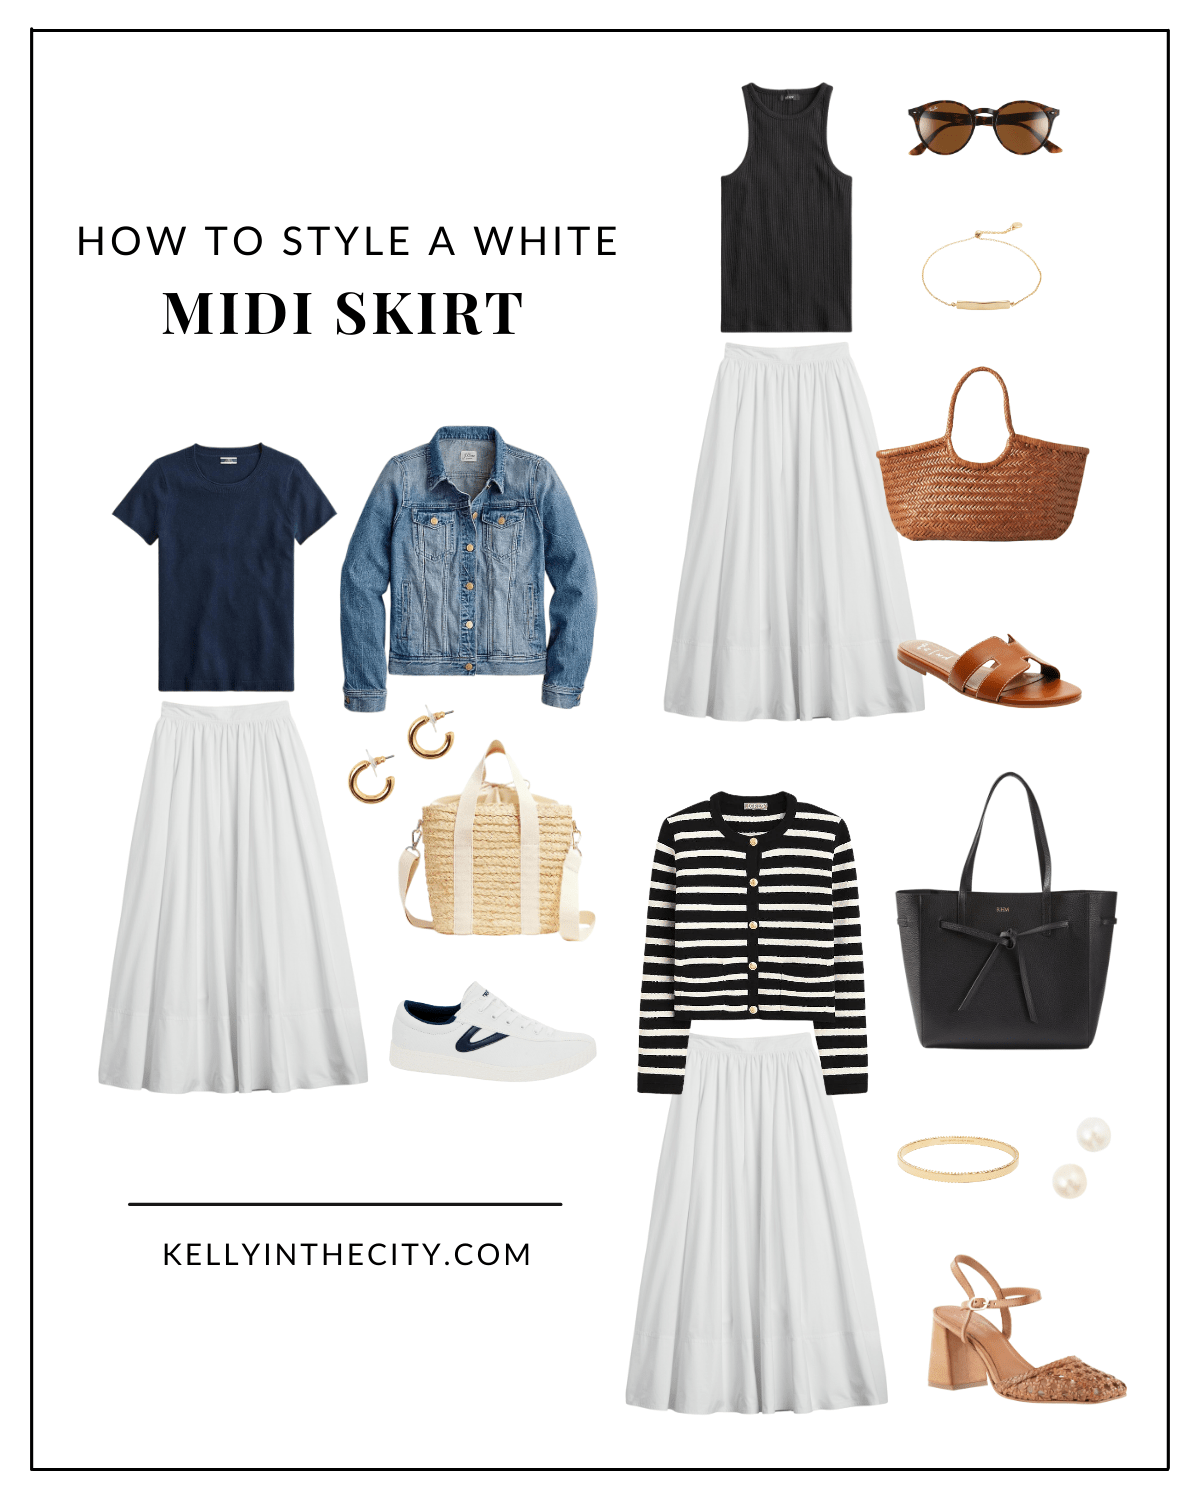 How to Style a White Midi Skirt